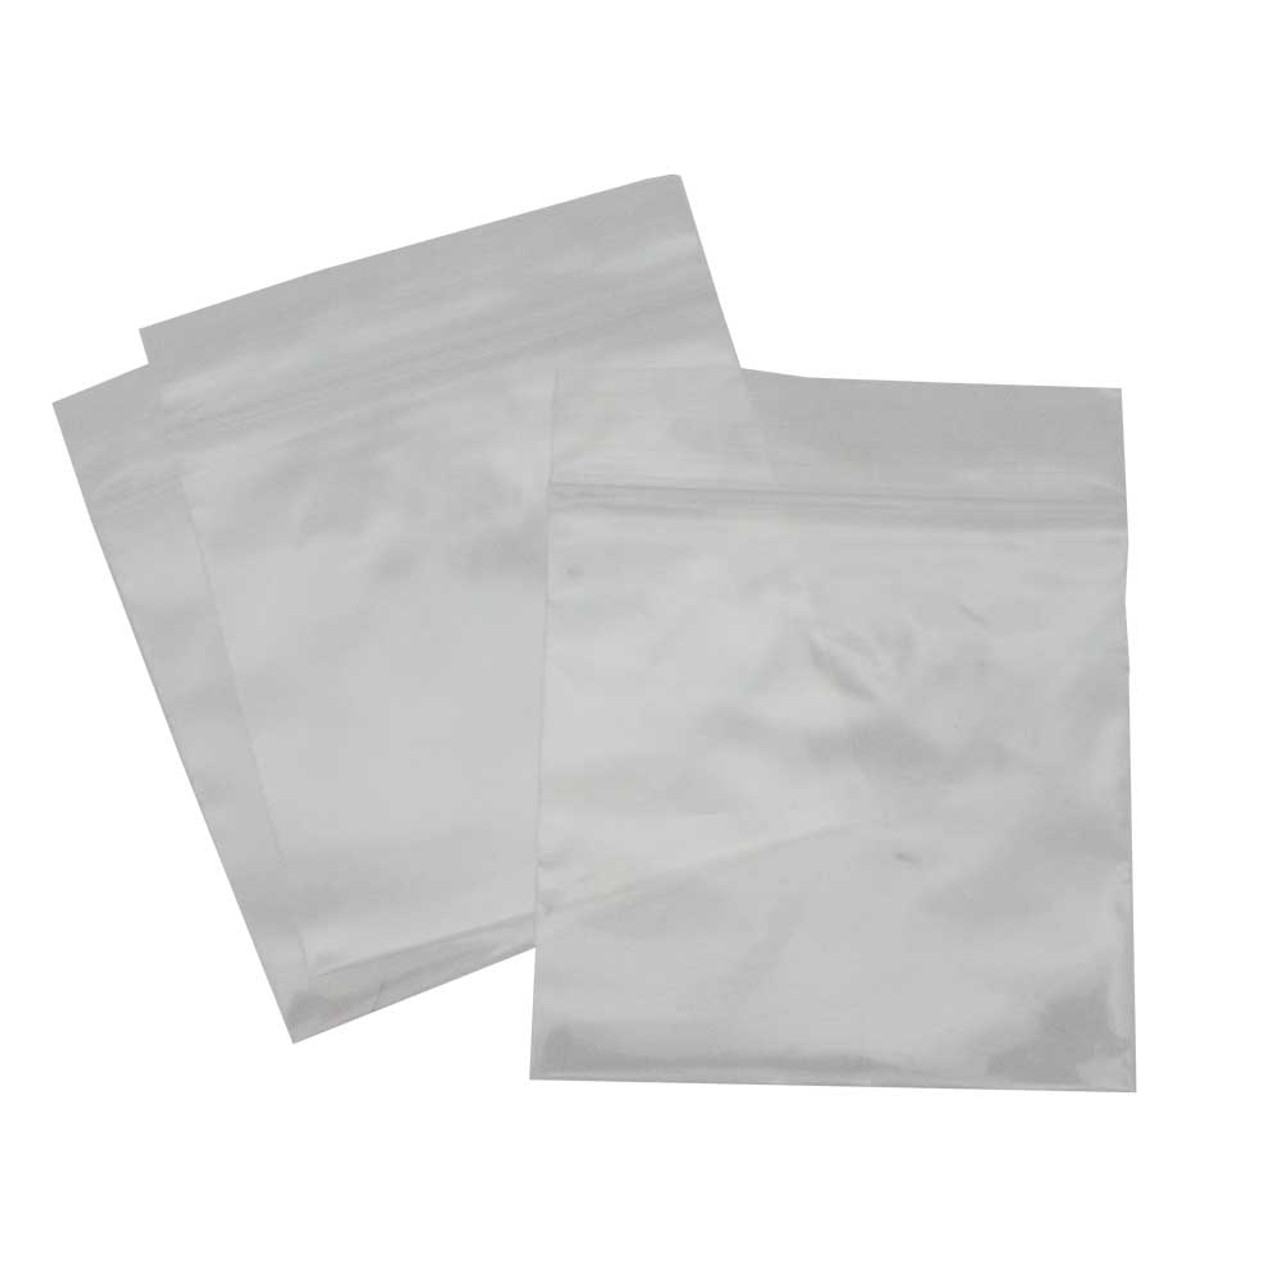 International Plastics 2 x 3 ClearZip Lock Bags 0.002 Gauge - Case of 1000 | CZ20203